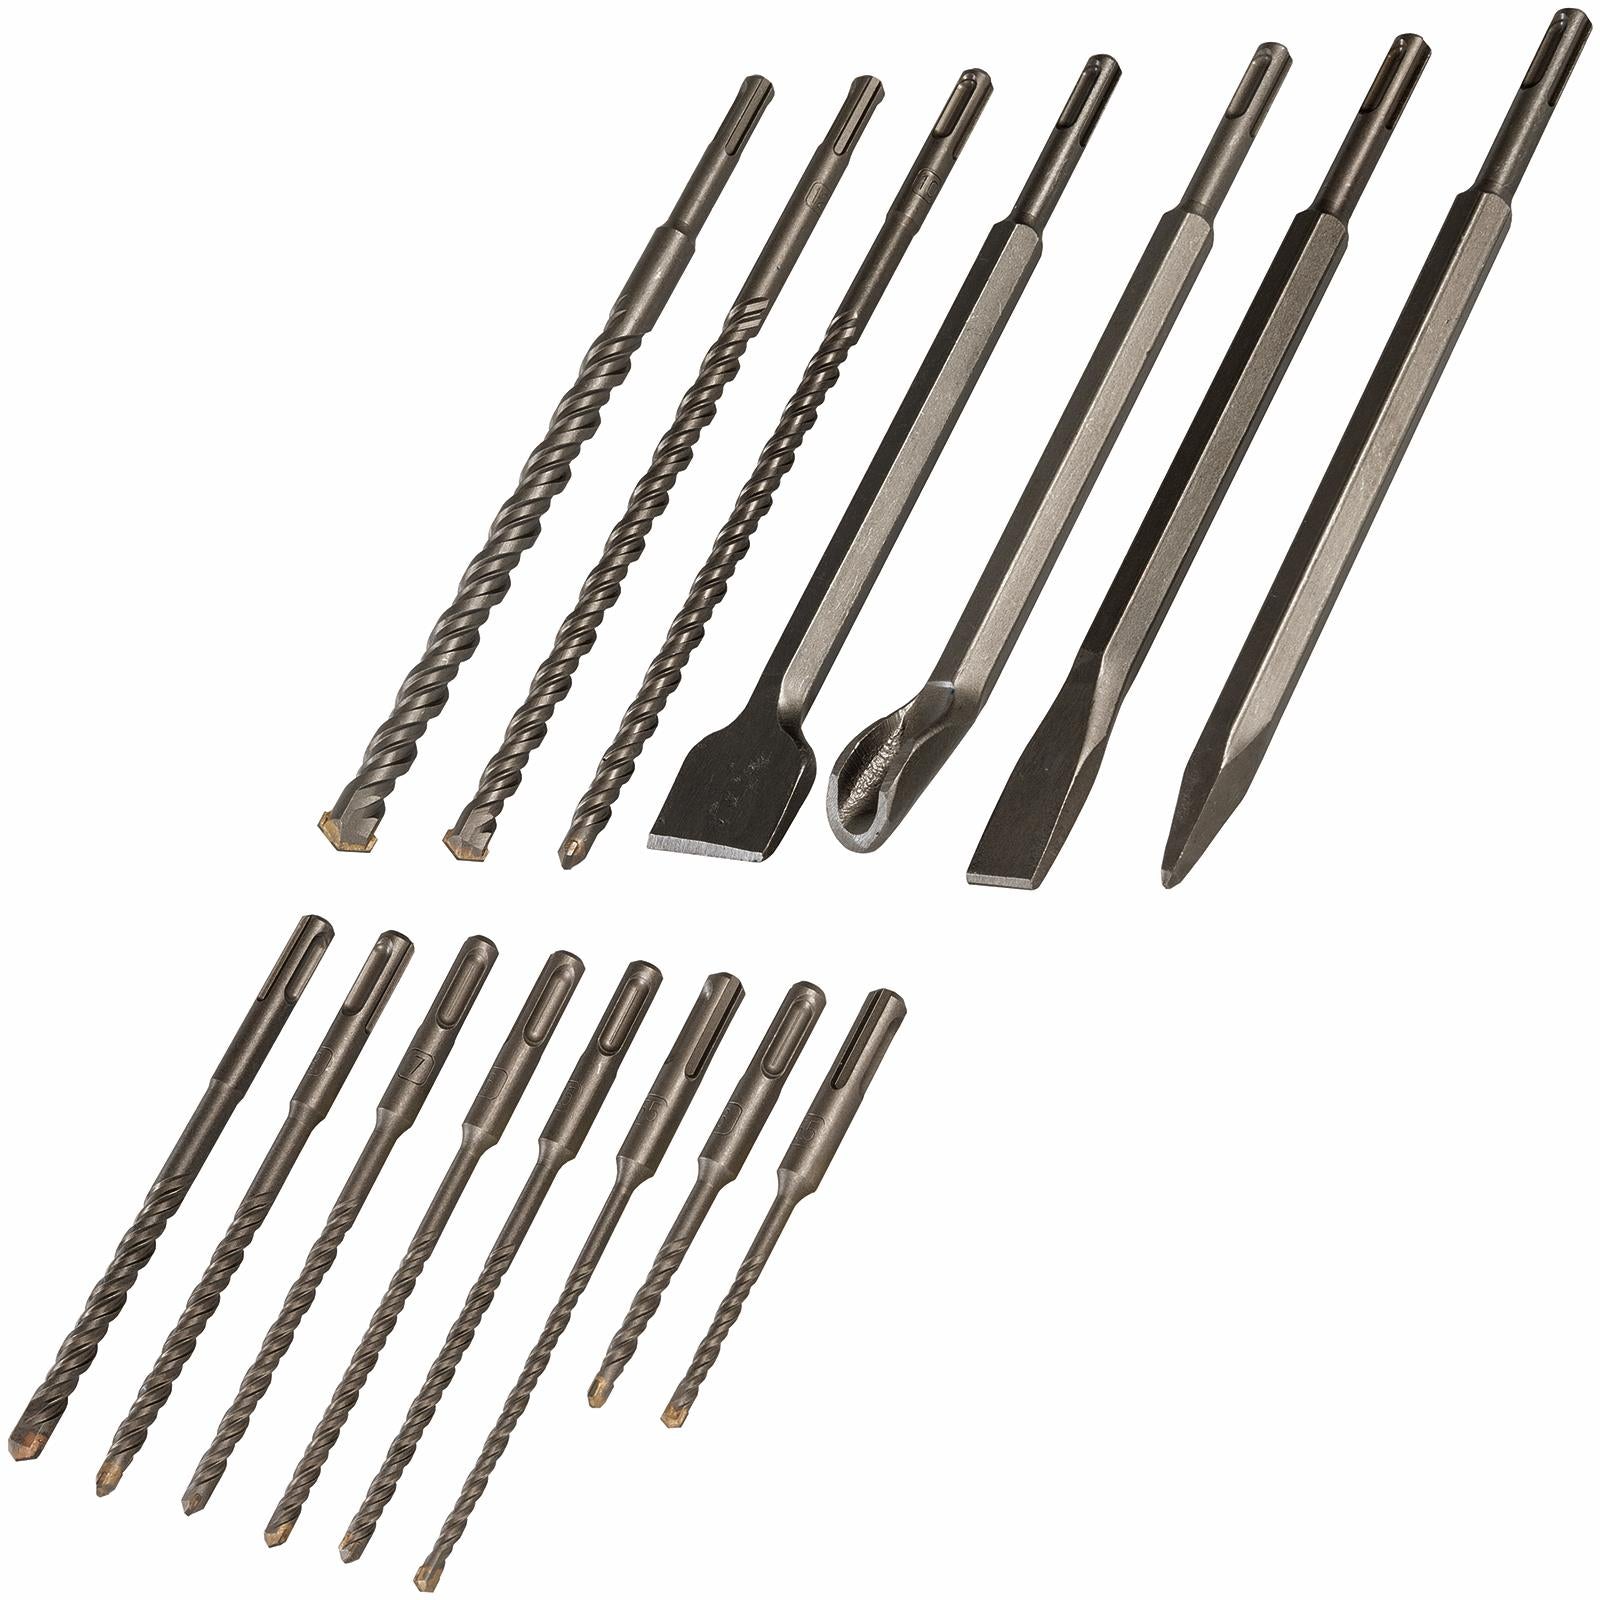 Silverline 15 Piece SDS+ Masonry Drill & Steel Set Chisel Bit Set Steel 5.5mm-16mm